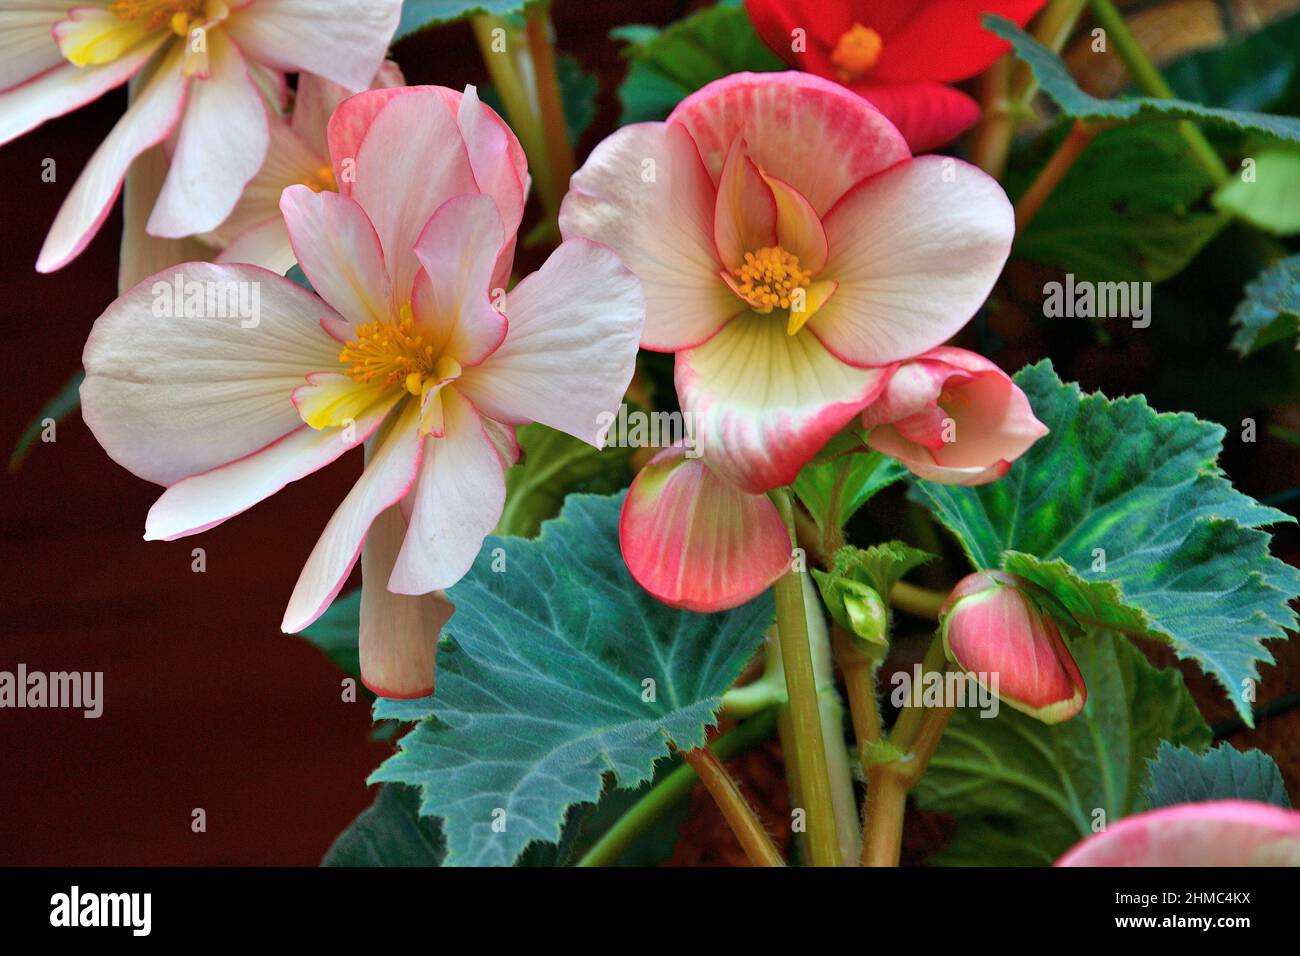 Begonia Tuberhybrida blanc tendre fleurs roses, gros plan - fond floral.Fleurs lumineuses de la begonia tubéreuse - floriculture, culture de plantes, ga Banque D'Images